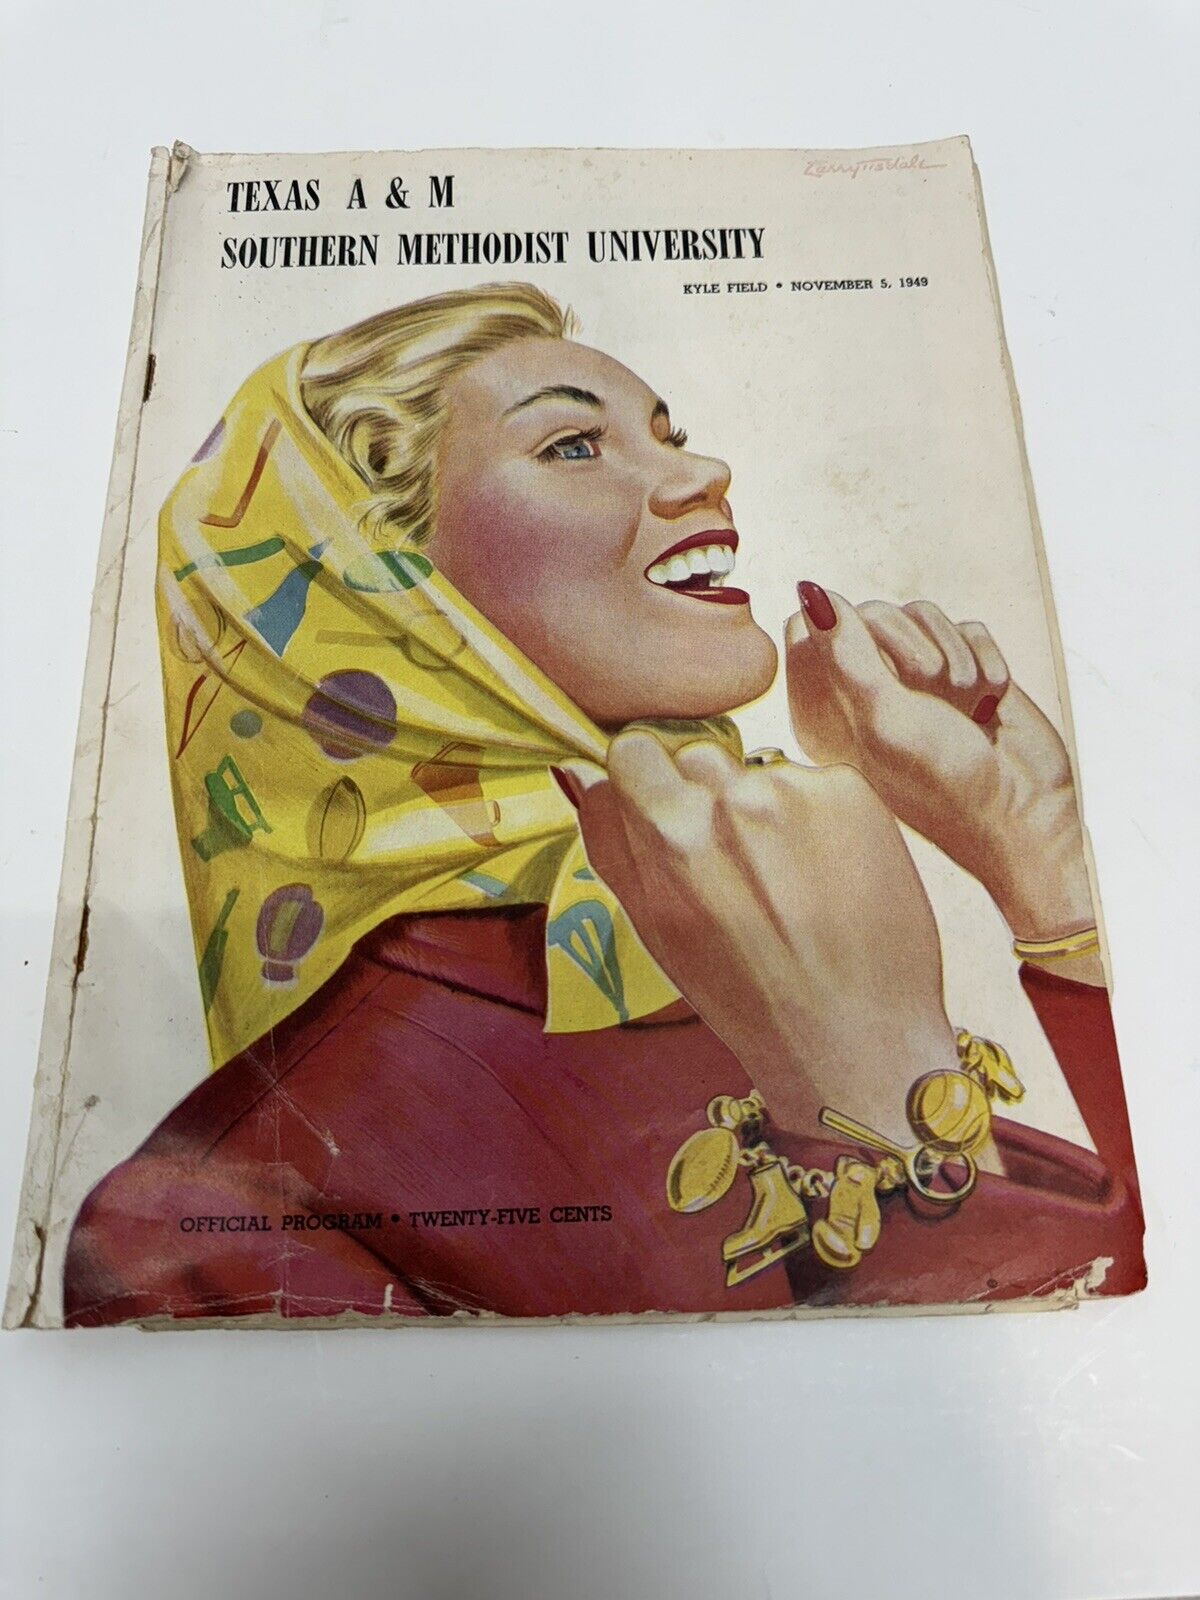 Texas A&M Southern Methodist University 1949 program